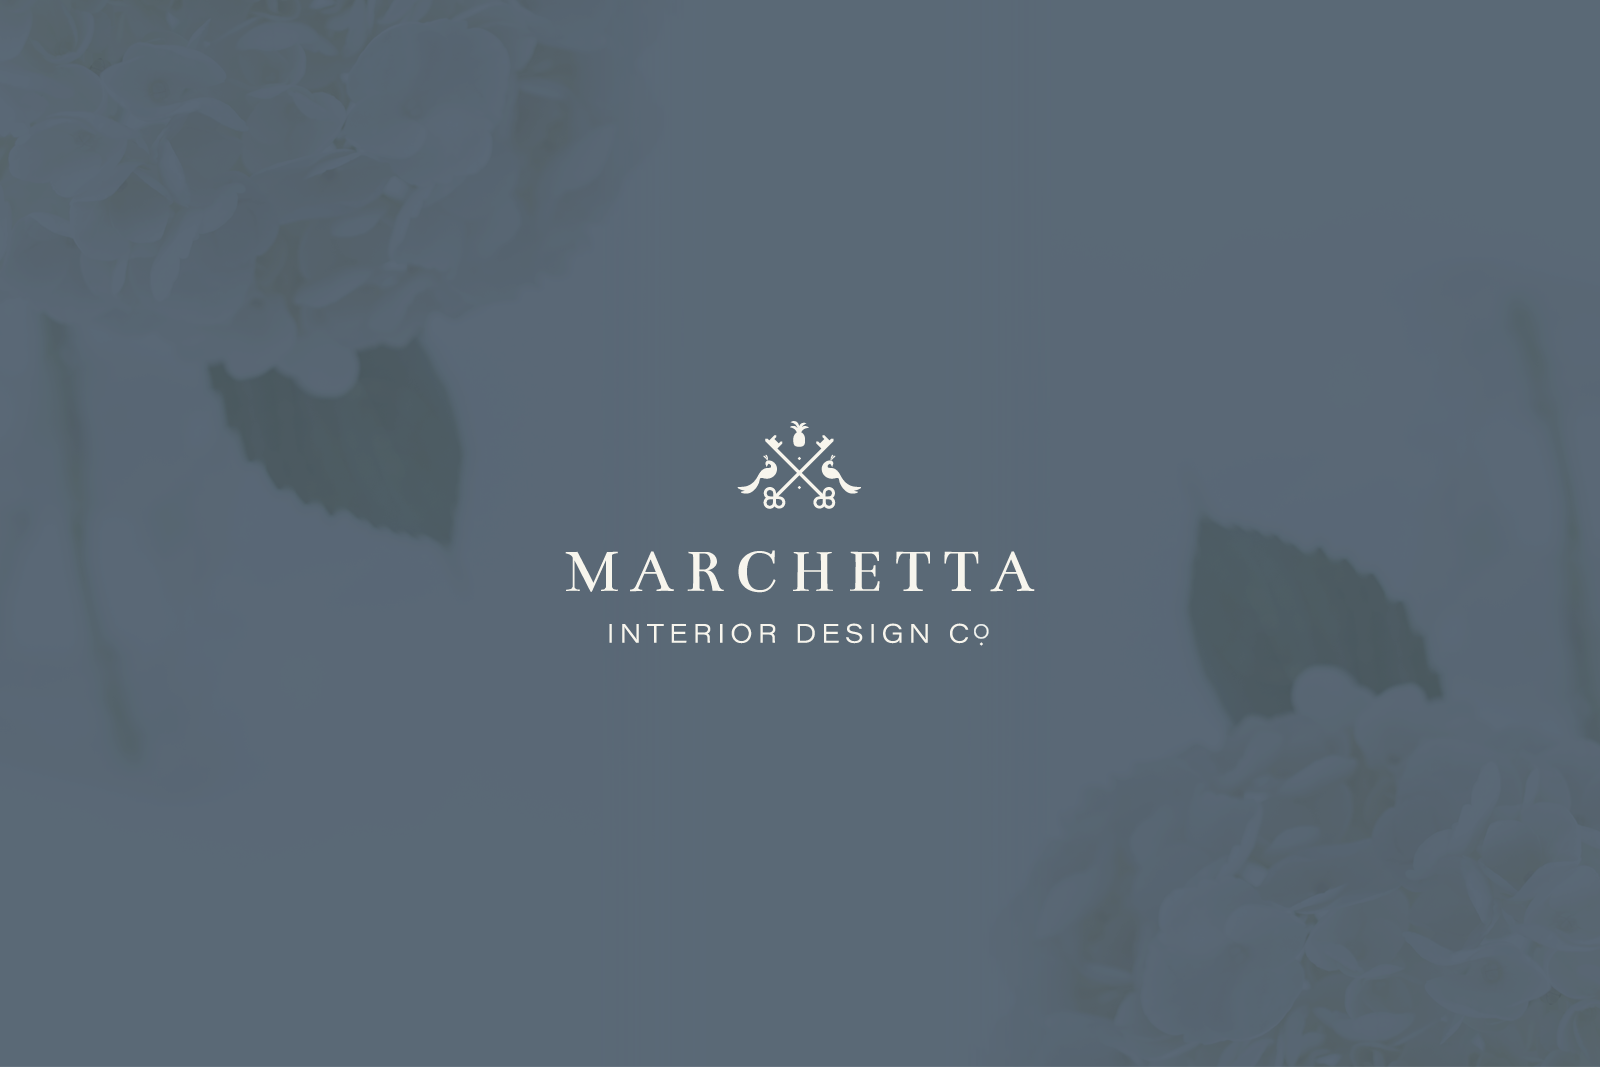 Interior Designer Branding: Marchetta // Sarah Ann Design